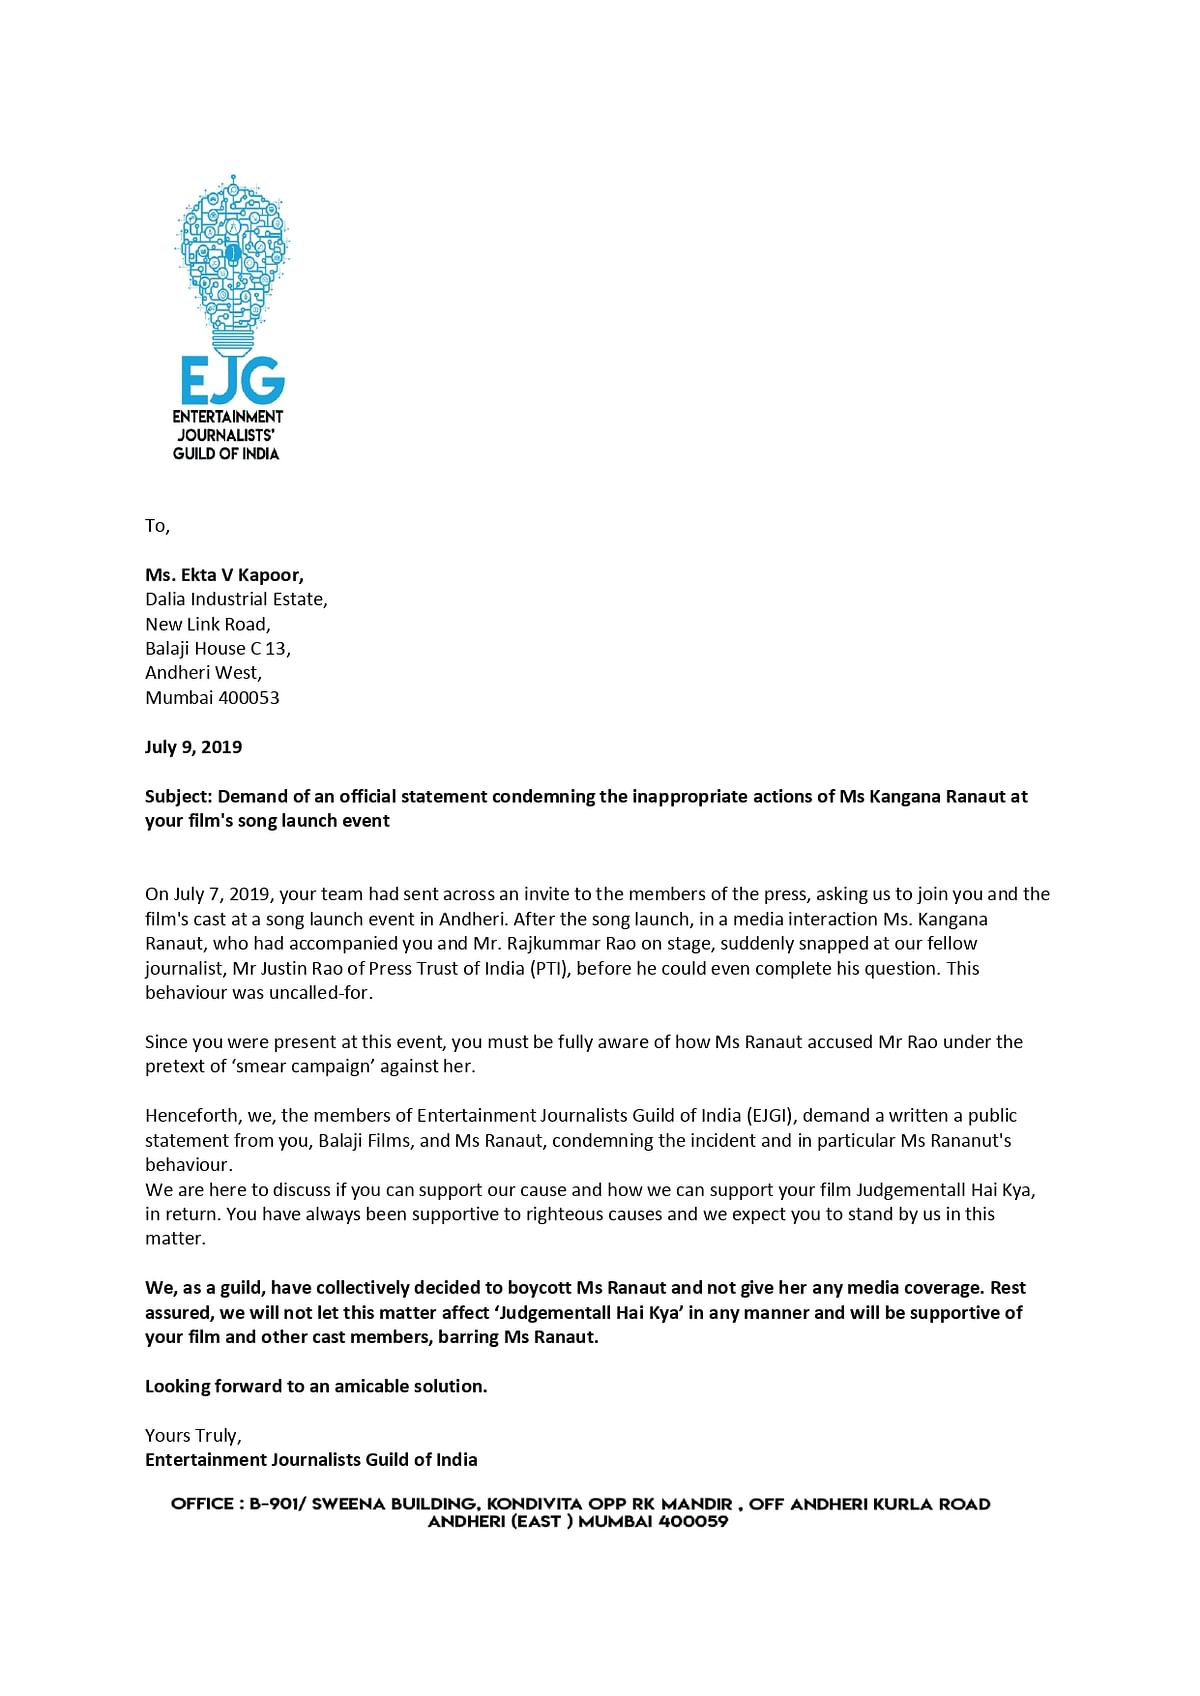 The ECJI has written a sharp letter to the Judmentall Hai Kya producer.